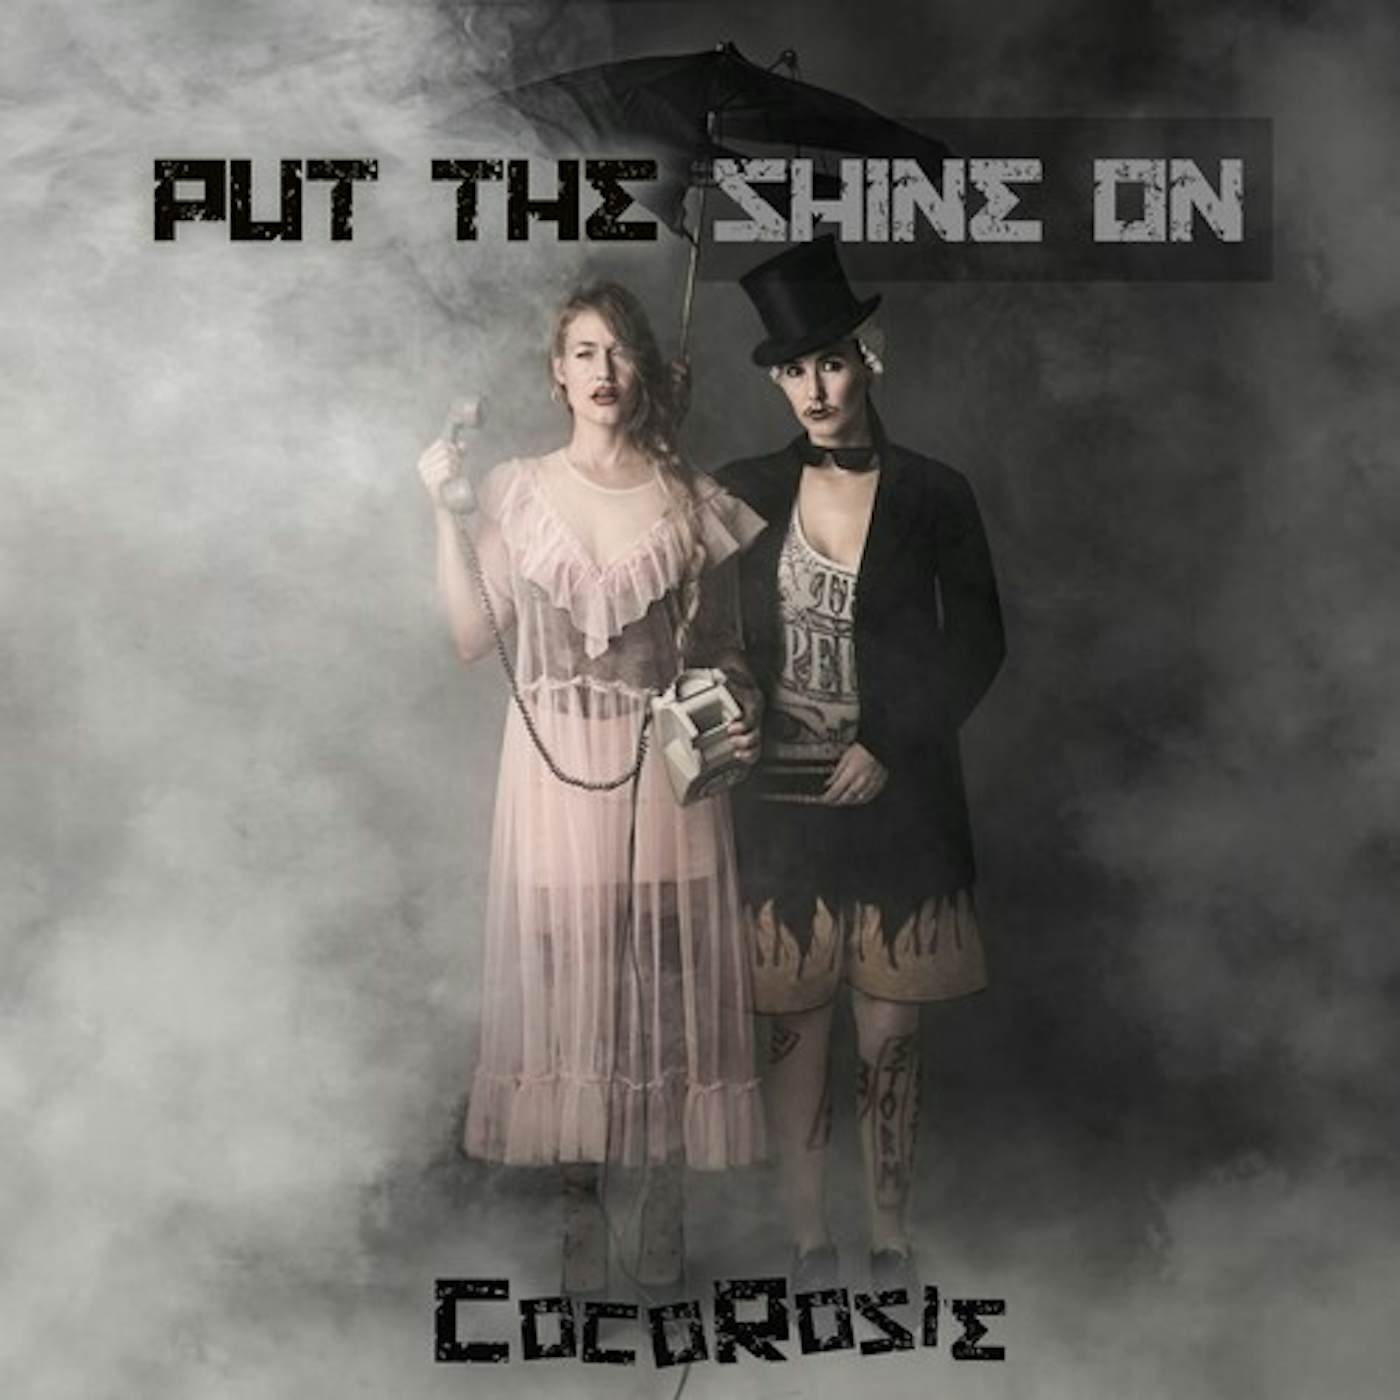 CocoRosie Put The Shine On (Colored) Vinyl Record